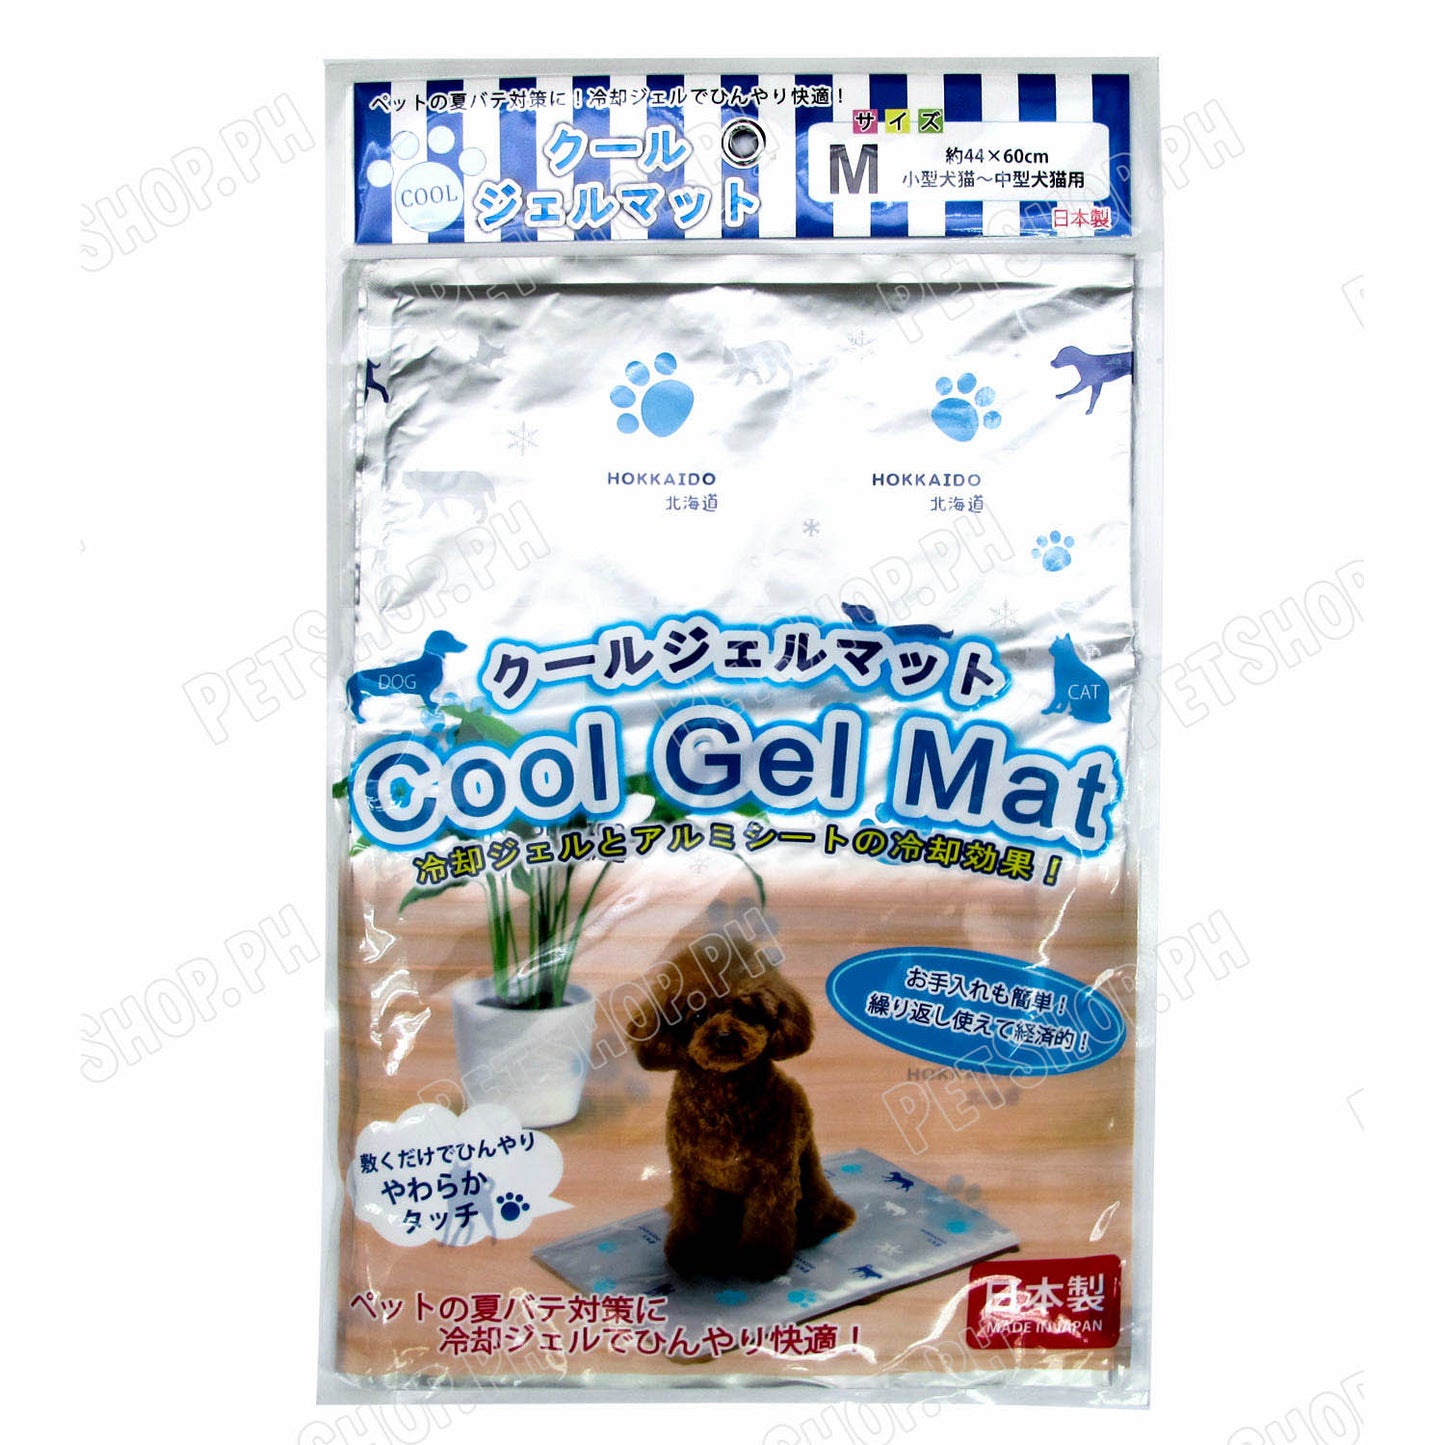 Hokkaido Cool Gel Mat